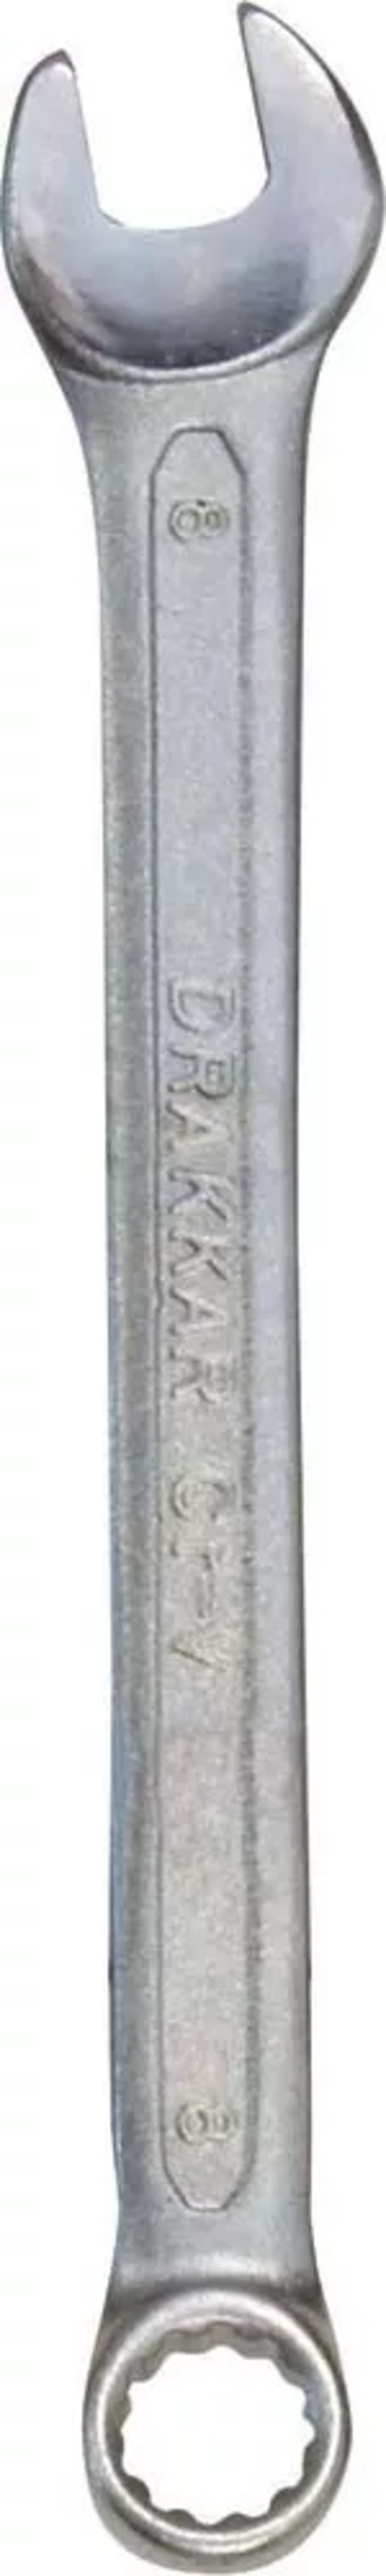 Cle mixte tete polie 8mm DRAKKAR TOOLS - 13758